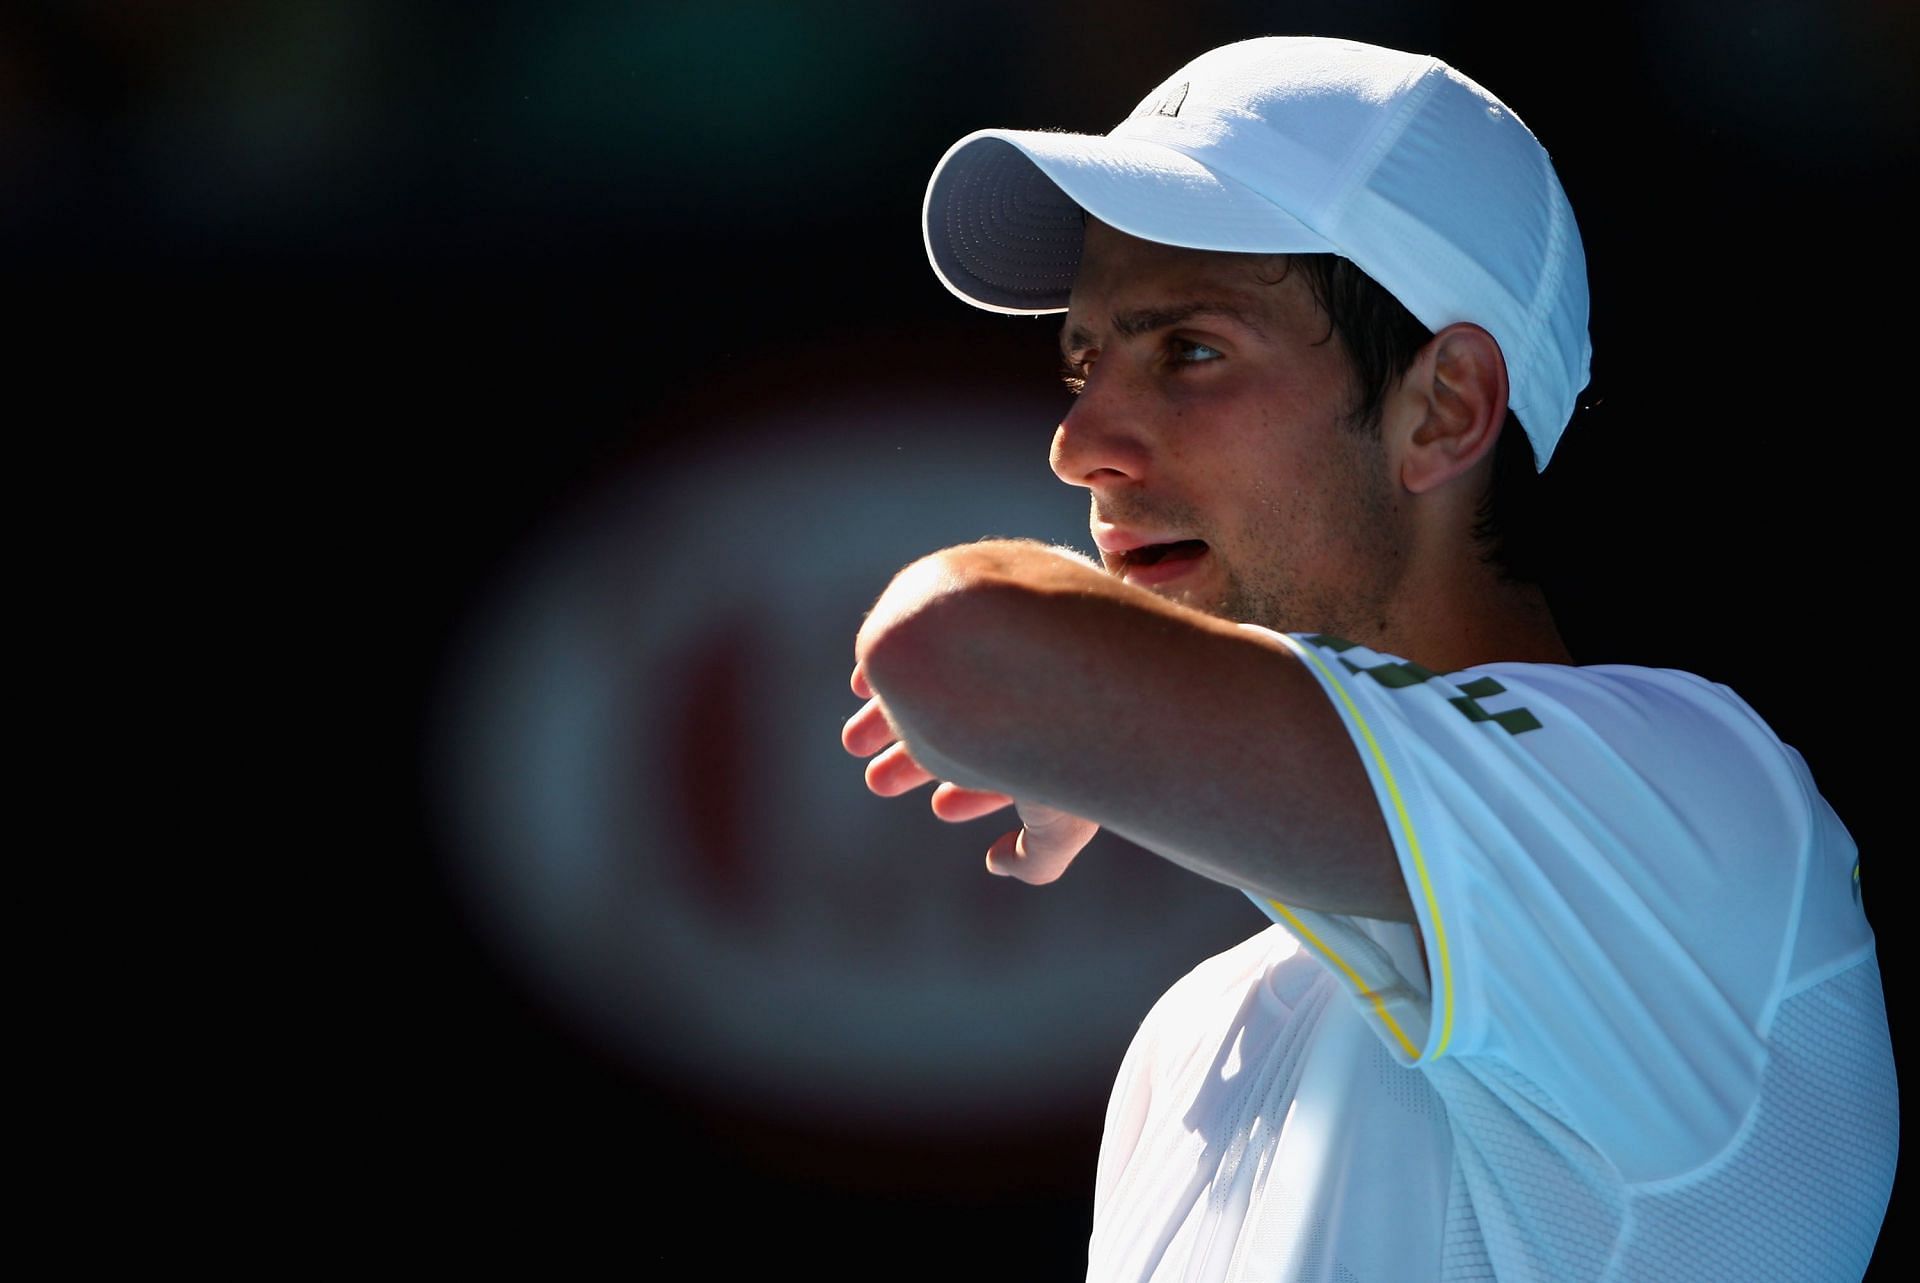 Novak Djokovic during his 2009 Australian Open quarterfinal against Andy Roddick